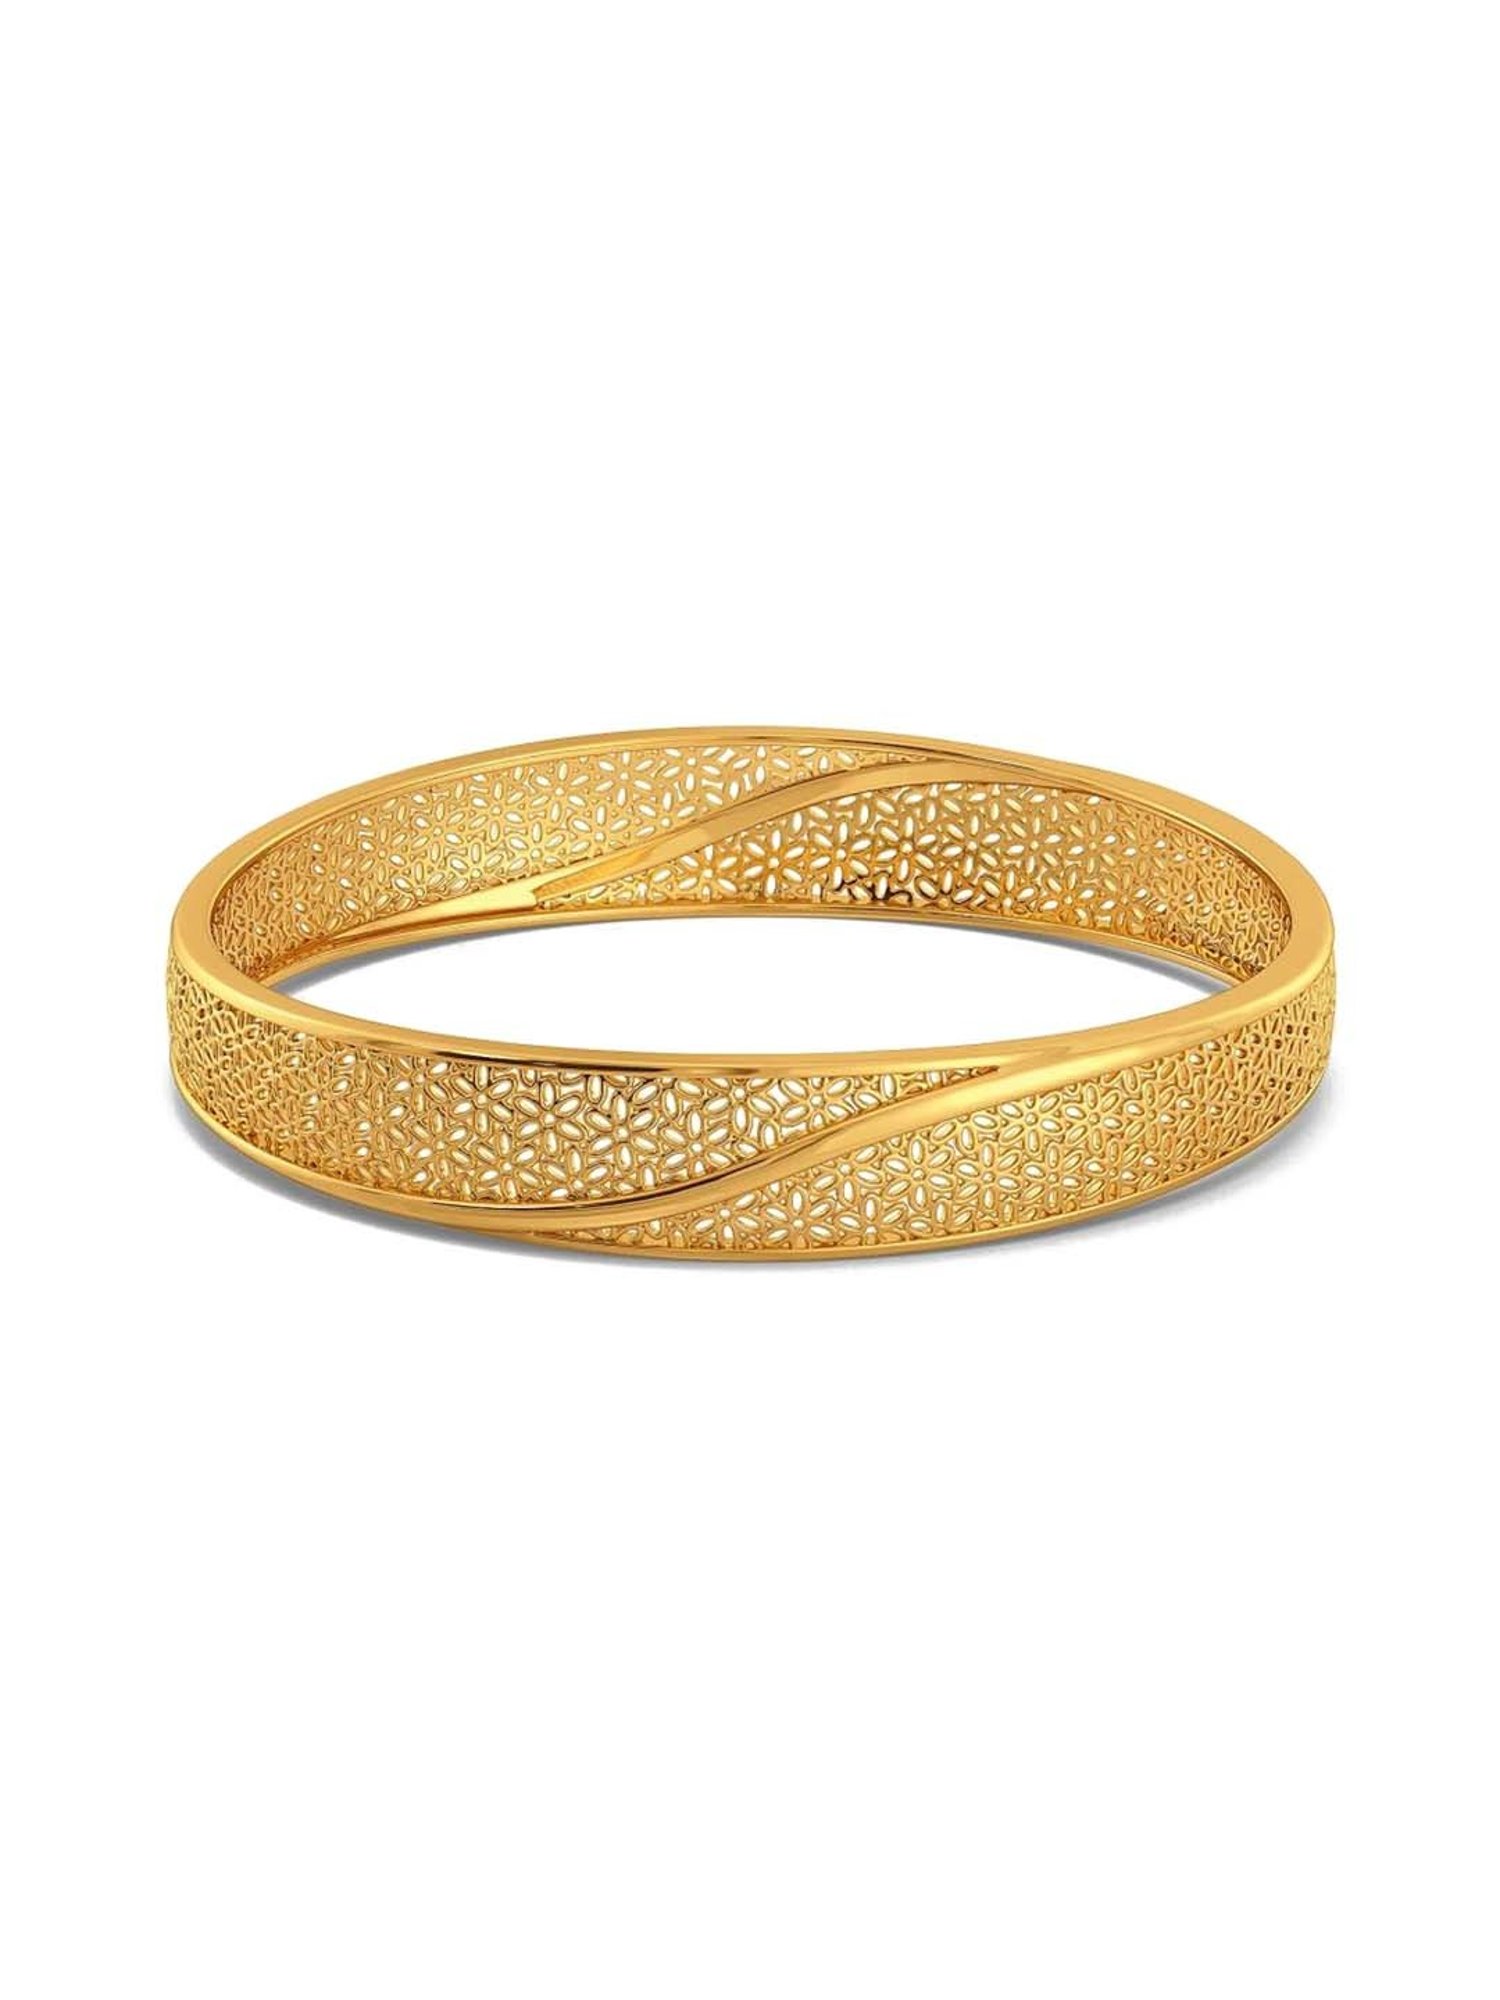 Melorra 18K Lace Nouveau Gold Earrings : : Fashion